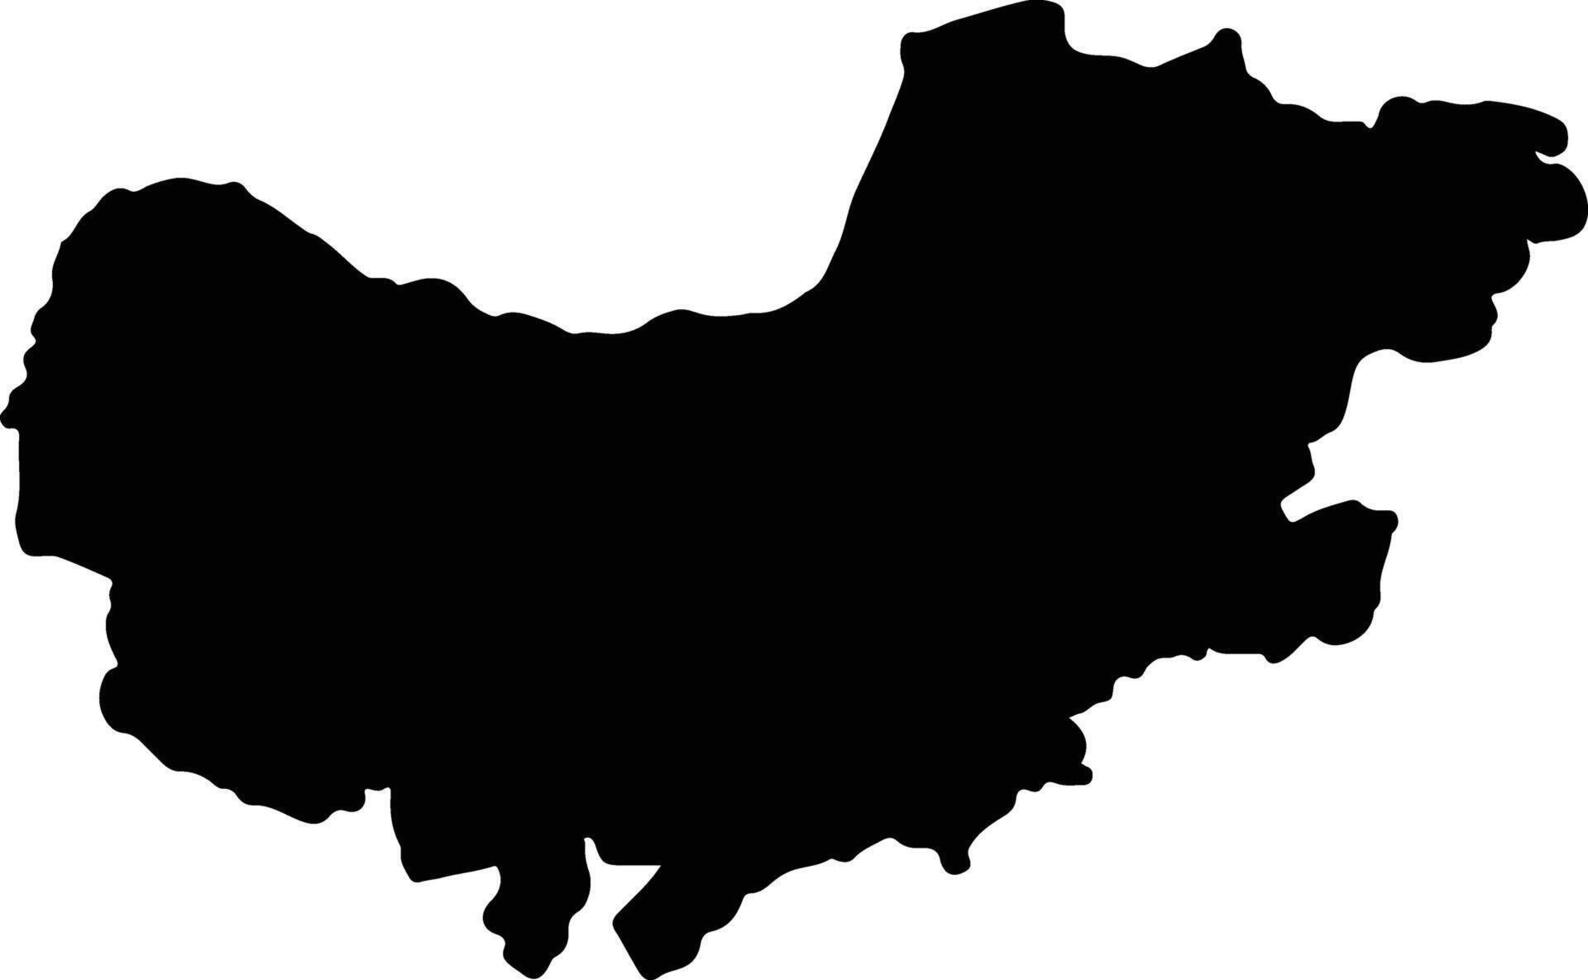 norte oeste sul África silhueta mapa vetor